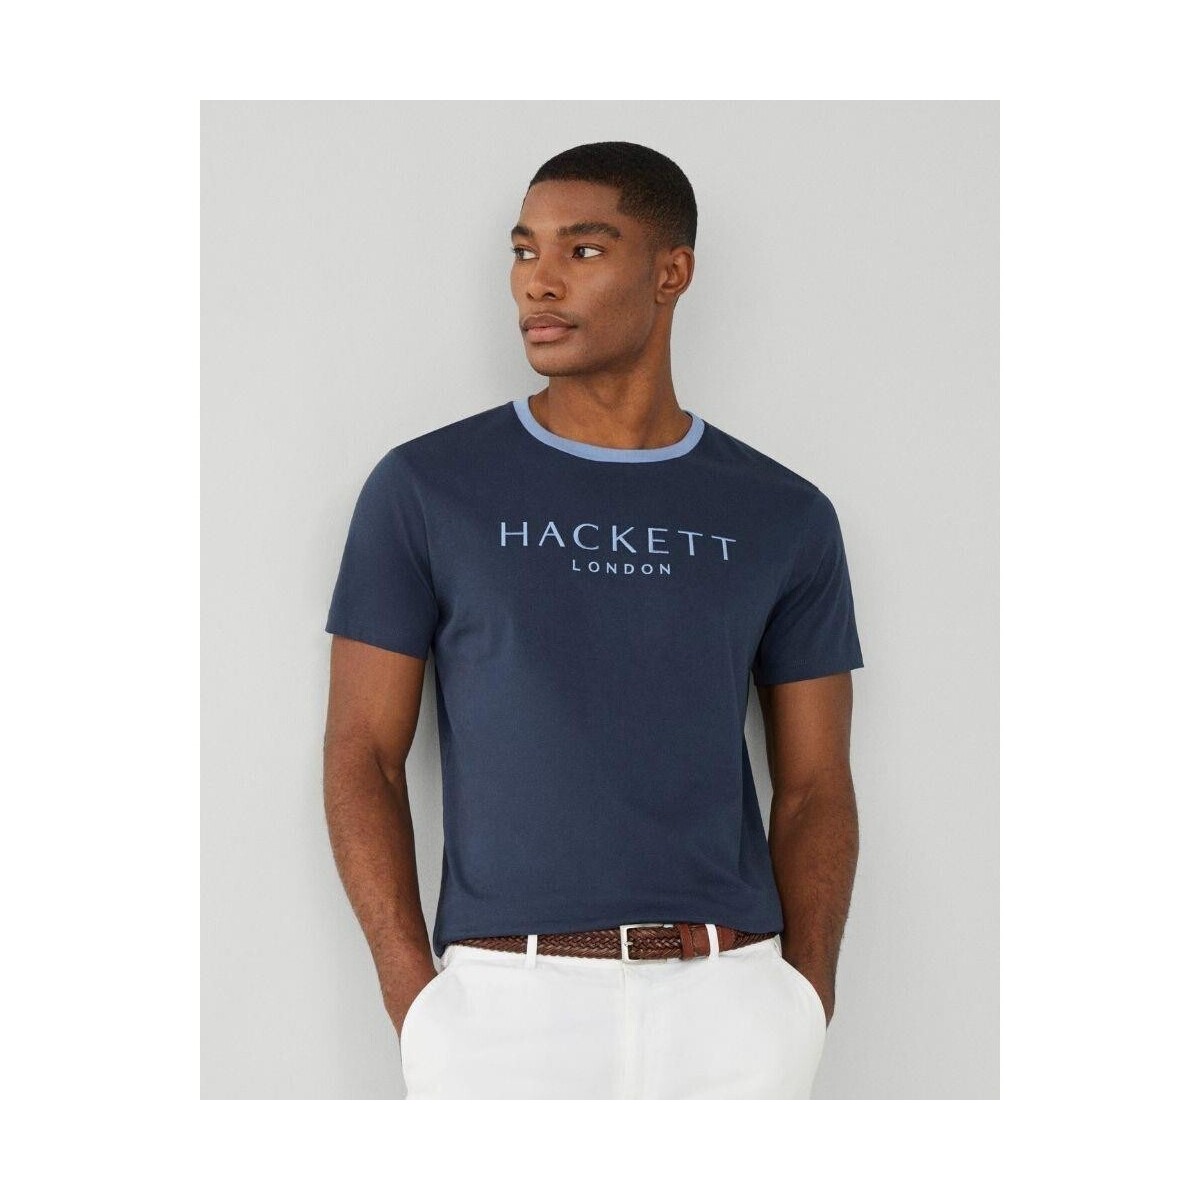 textil Herr T-shirts Hackett HM500797 HERITAGE Blå